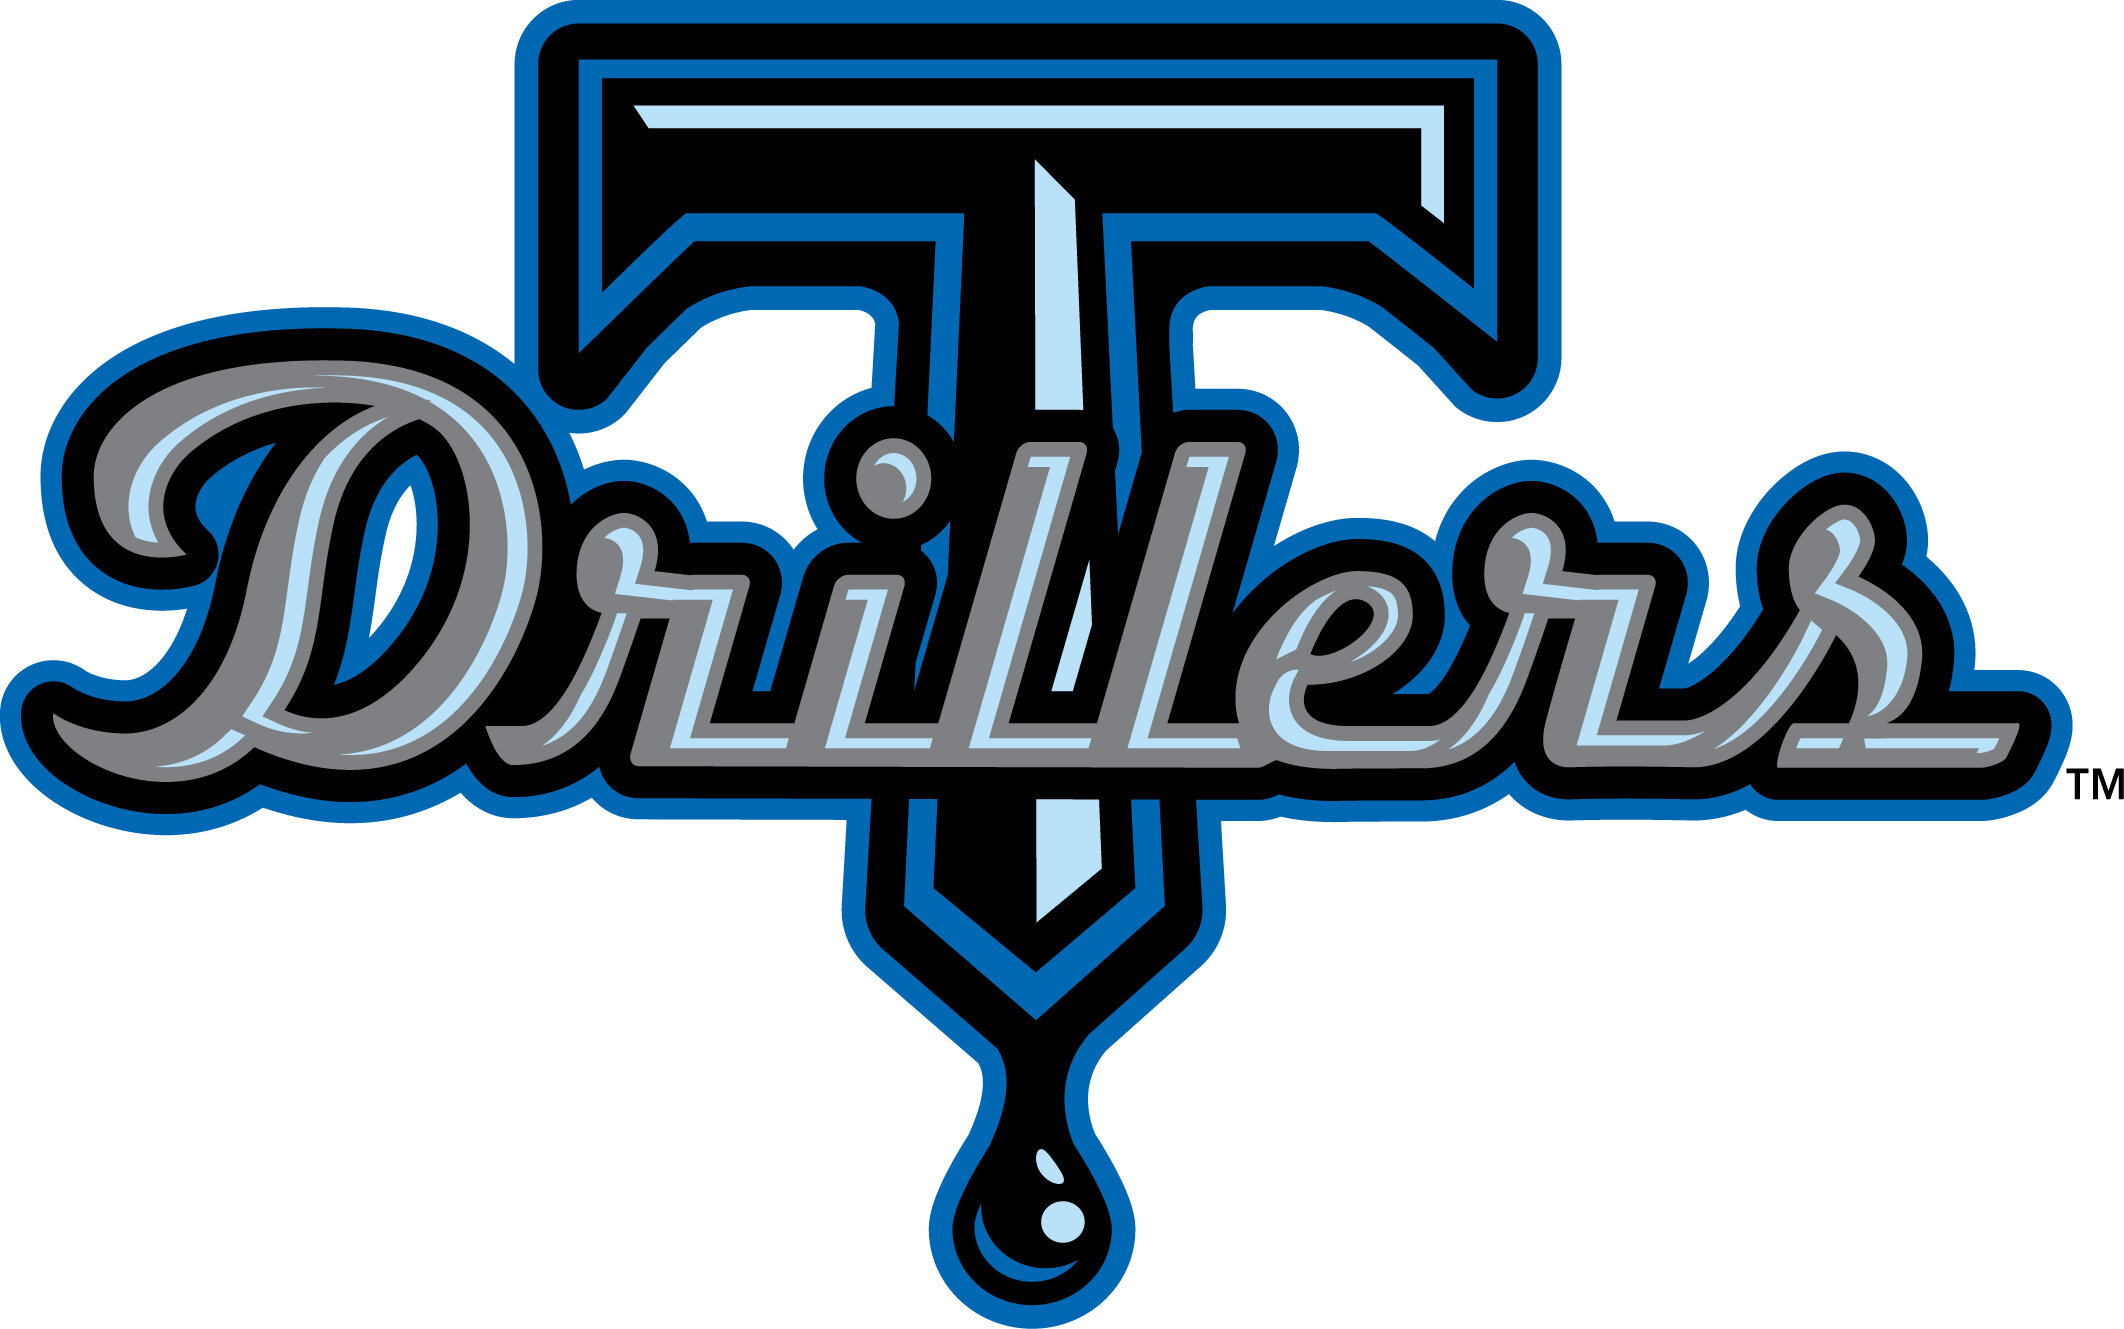 Tulsa Drillers logo.jpg